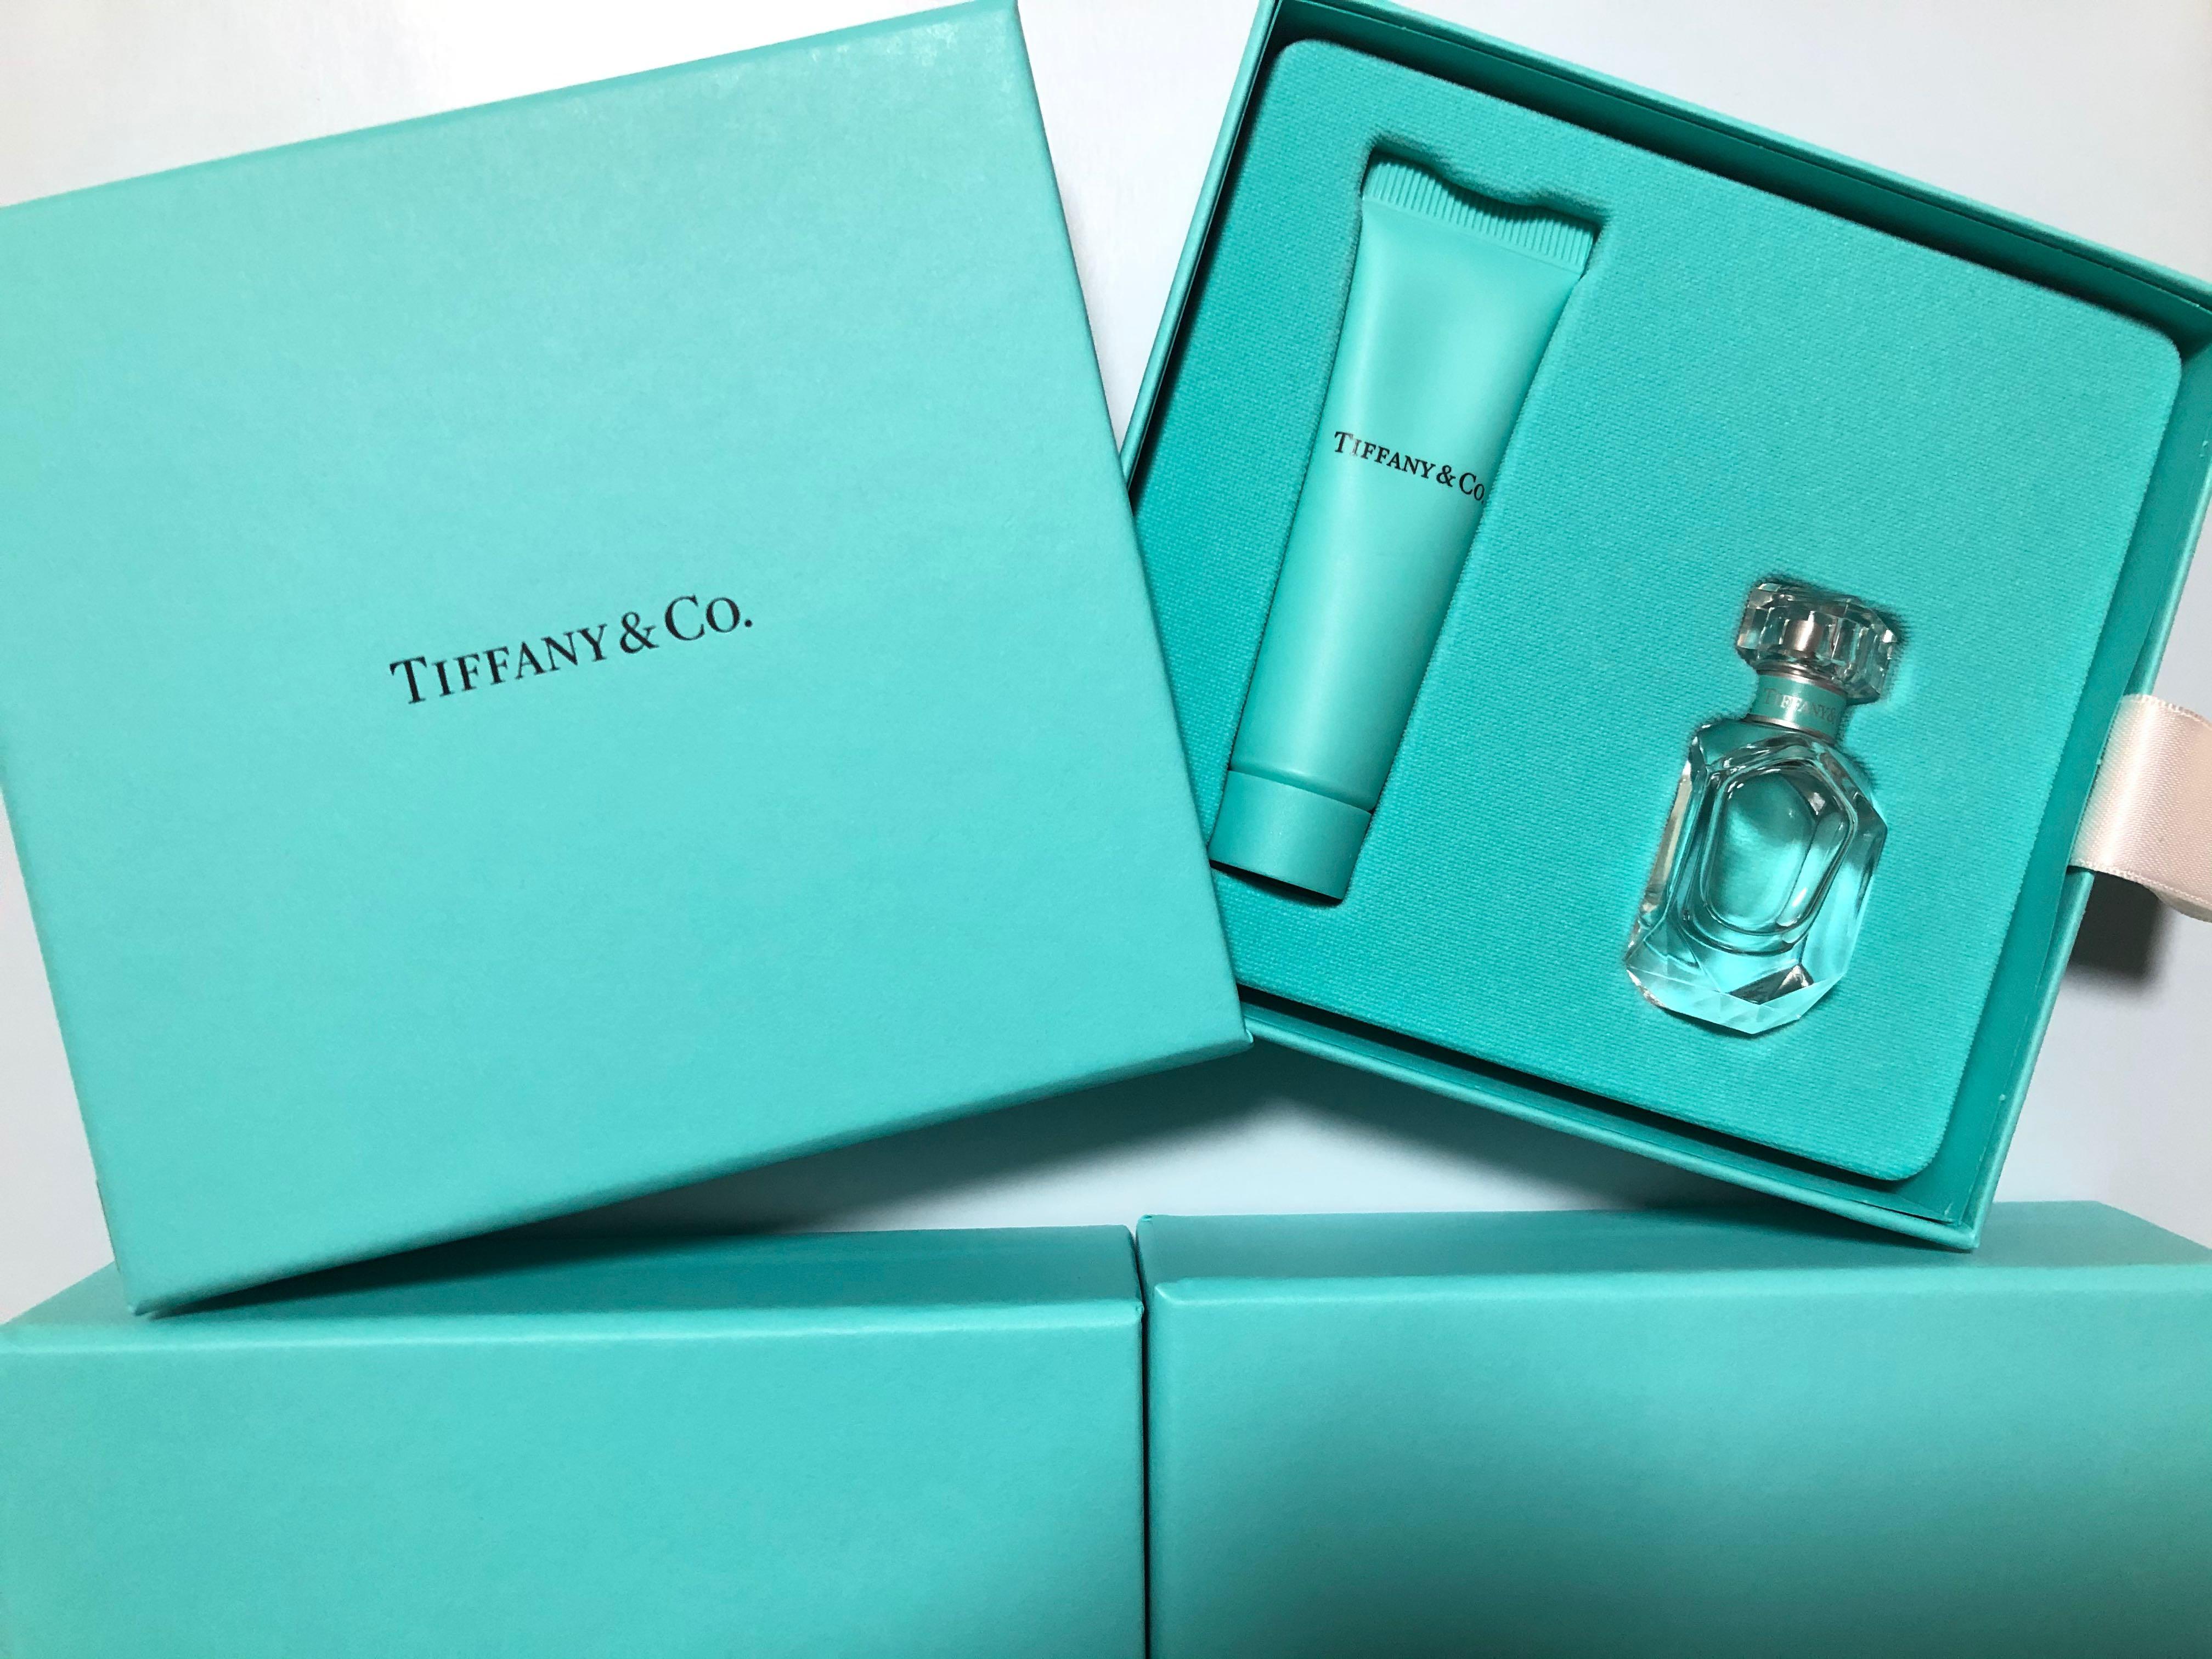 tiffany perfume box set